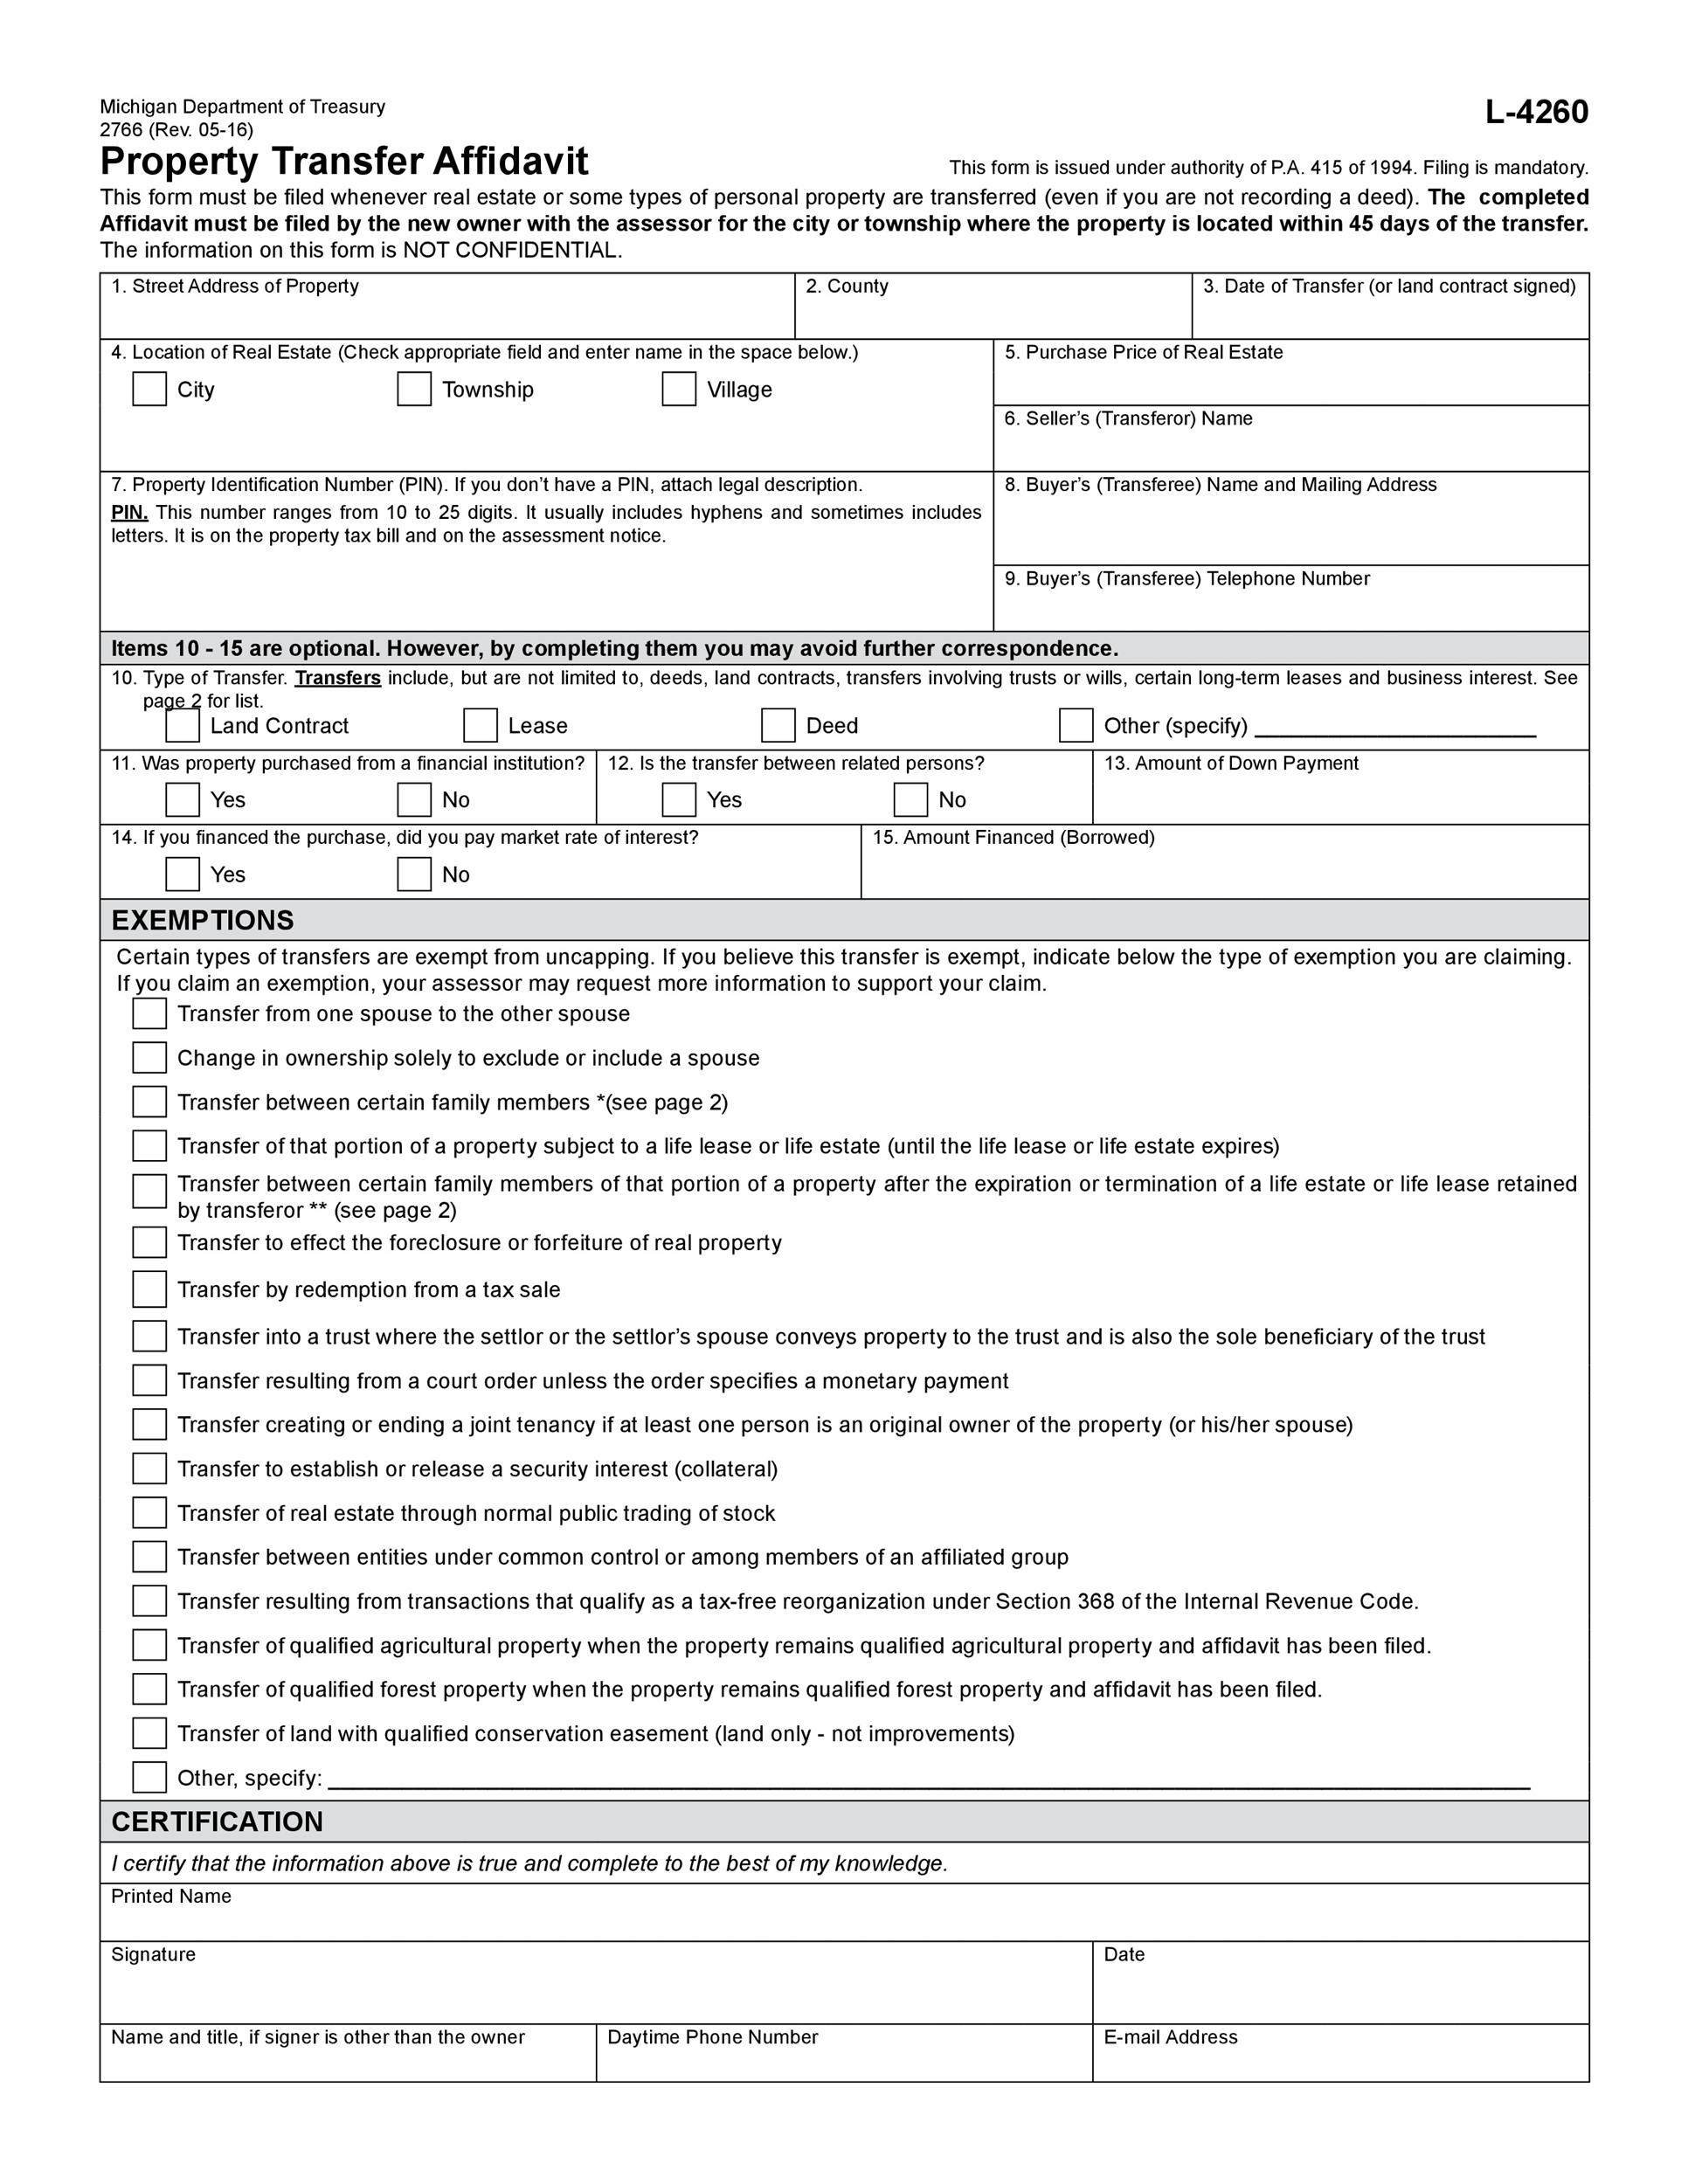 Free affidavit form 35